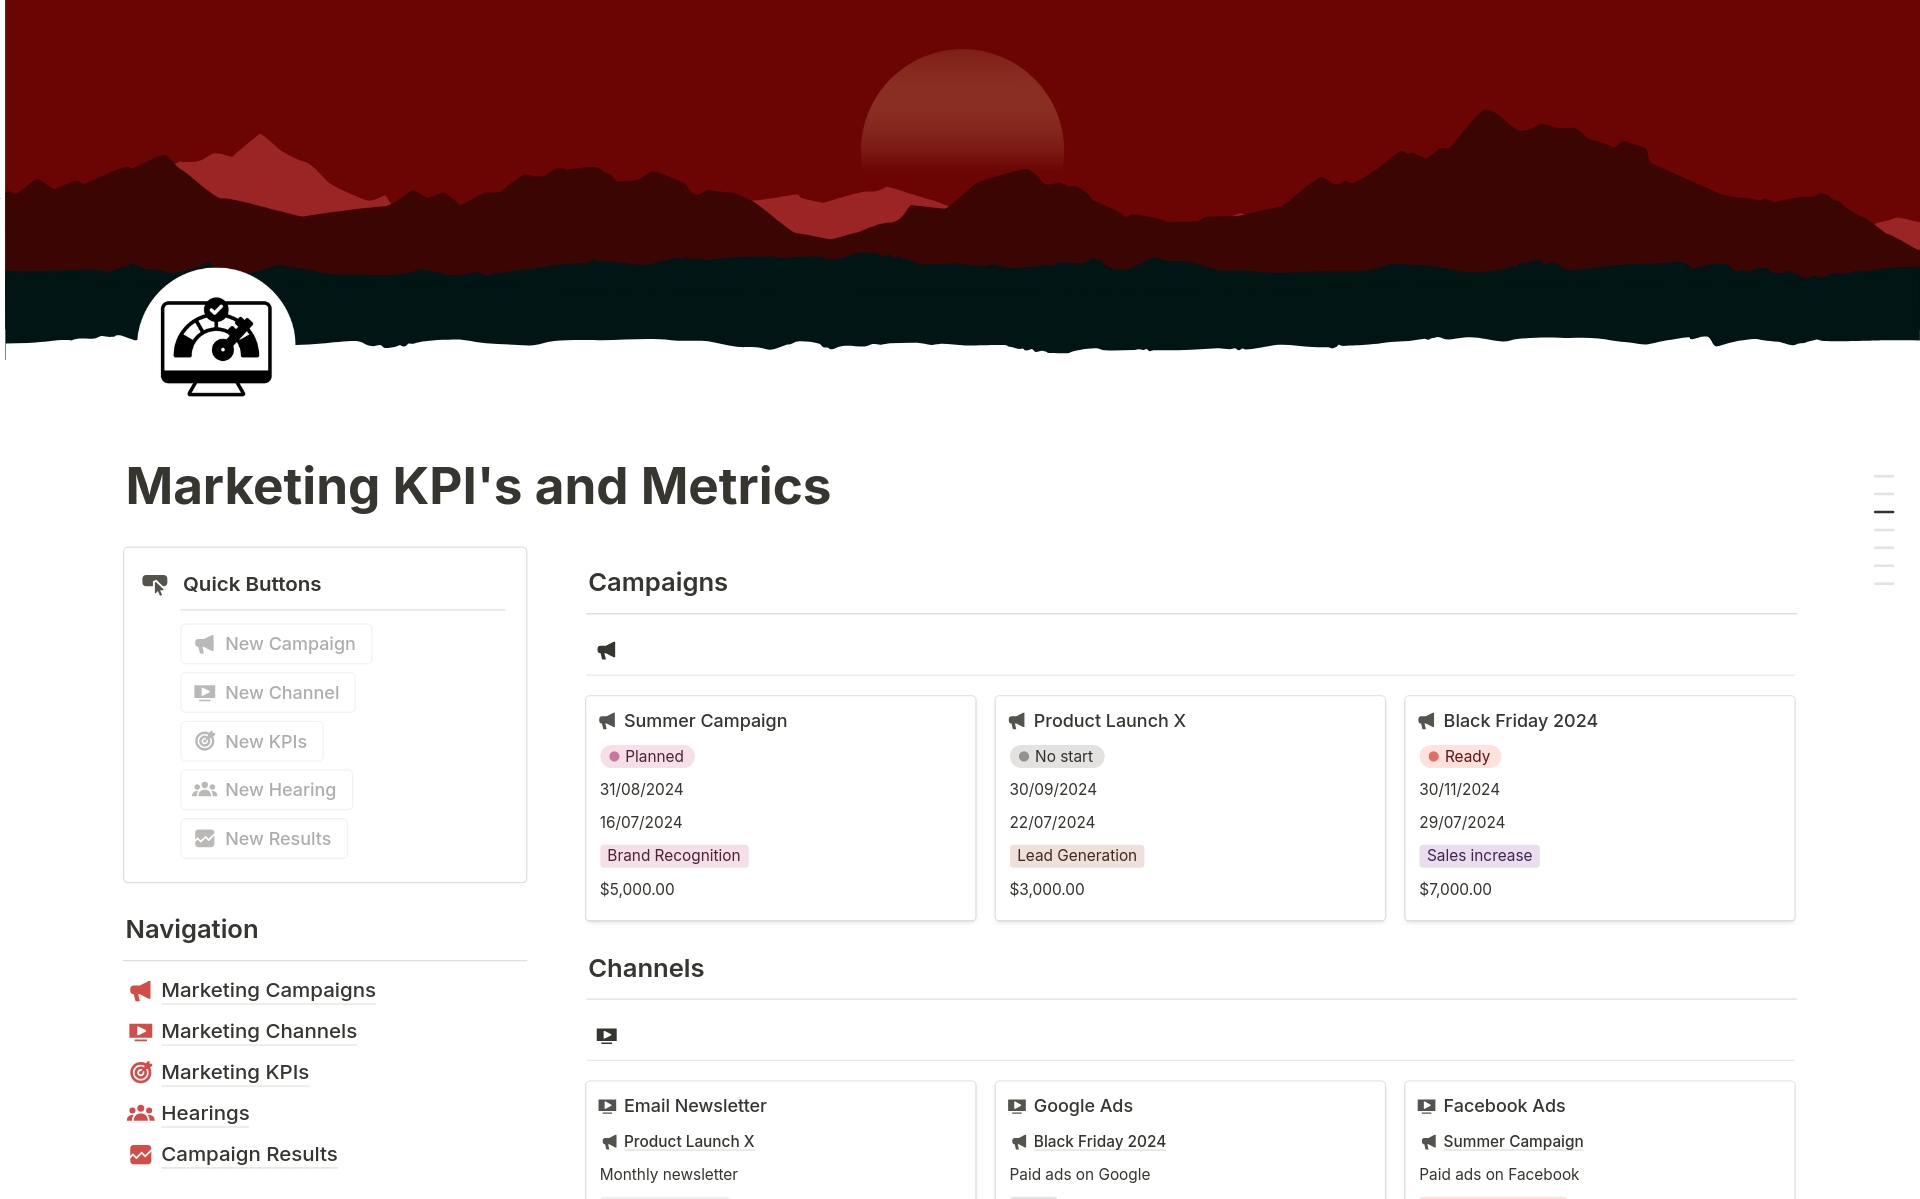 Vista previa de plantilla para Marketing KPI's and Metrics